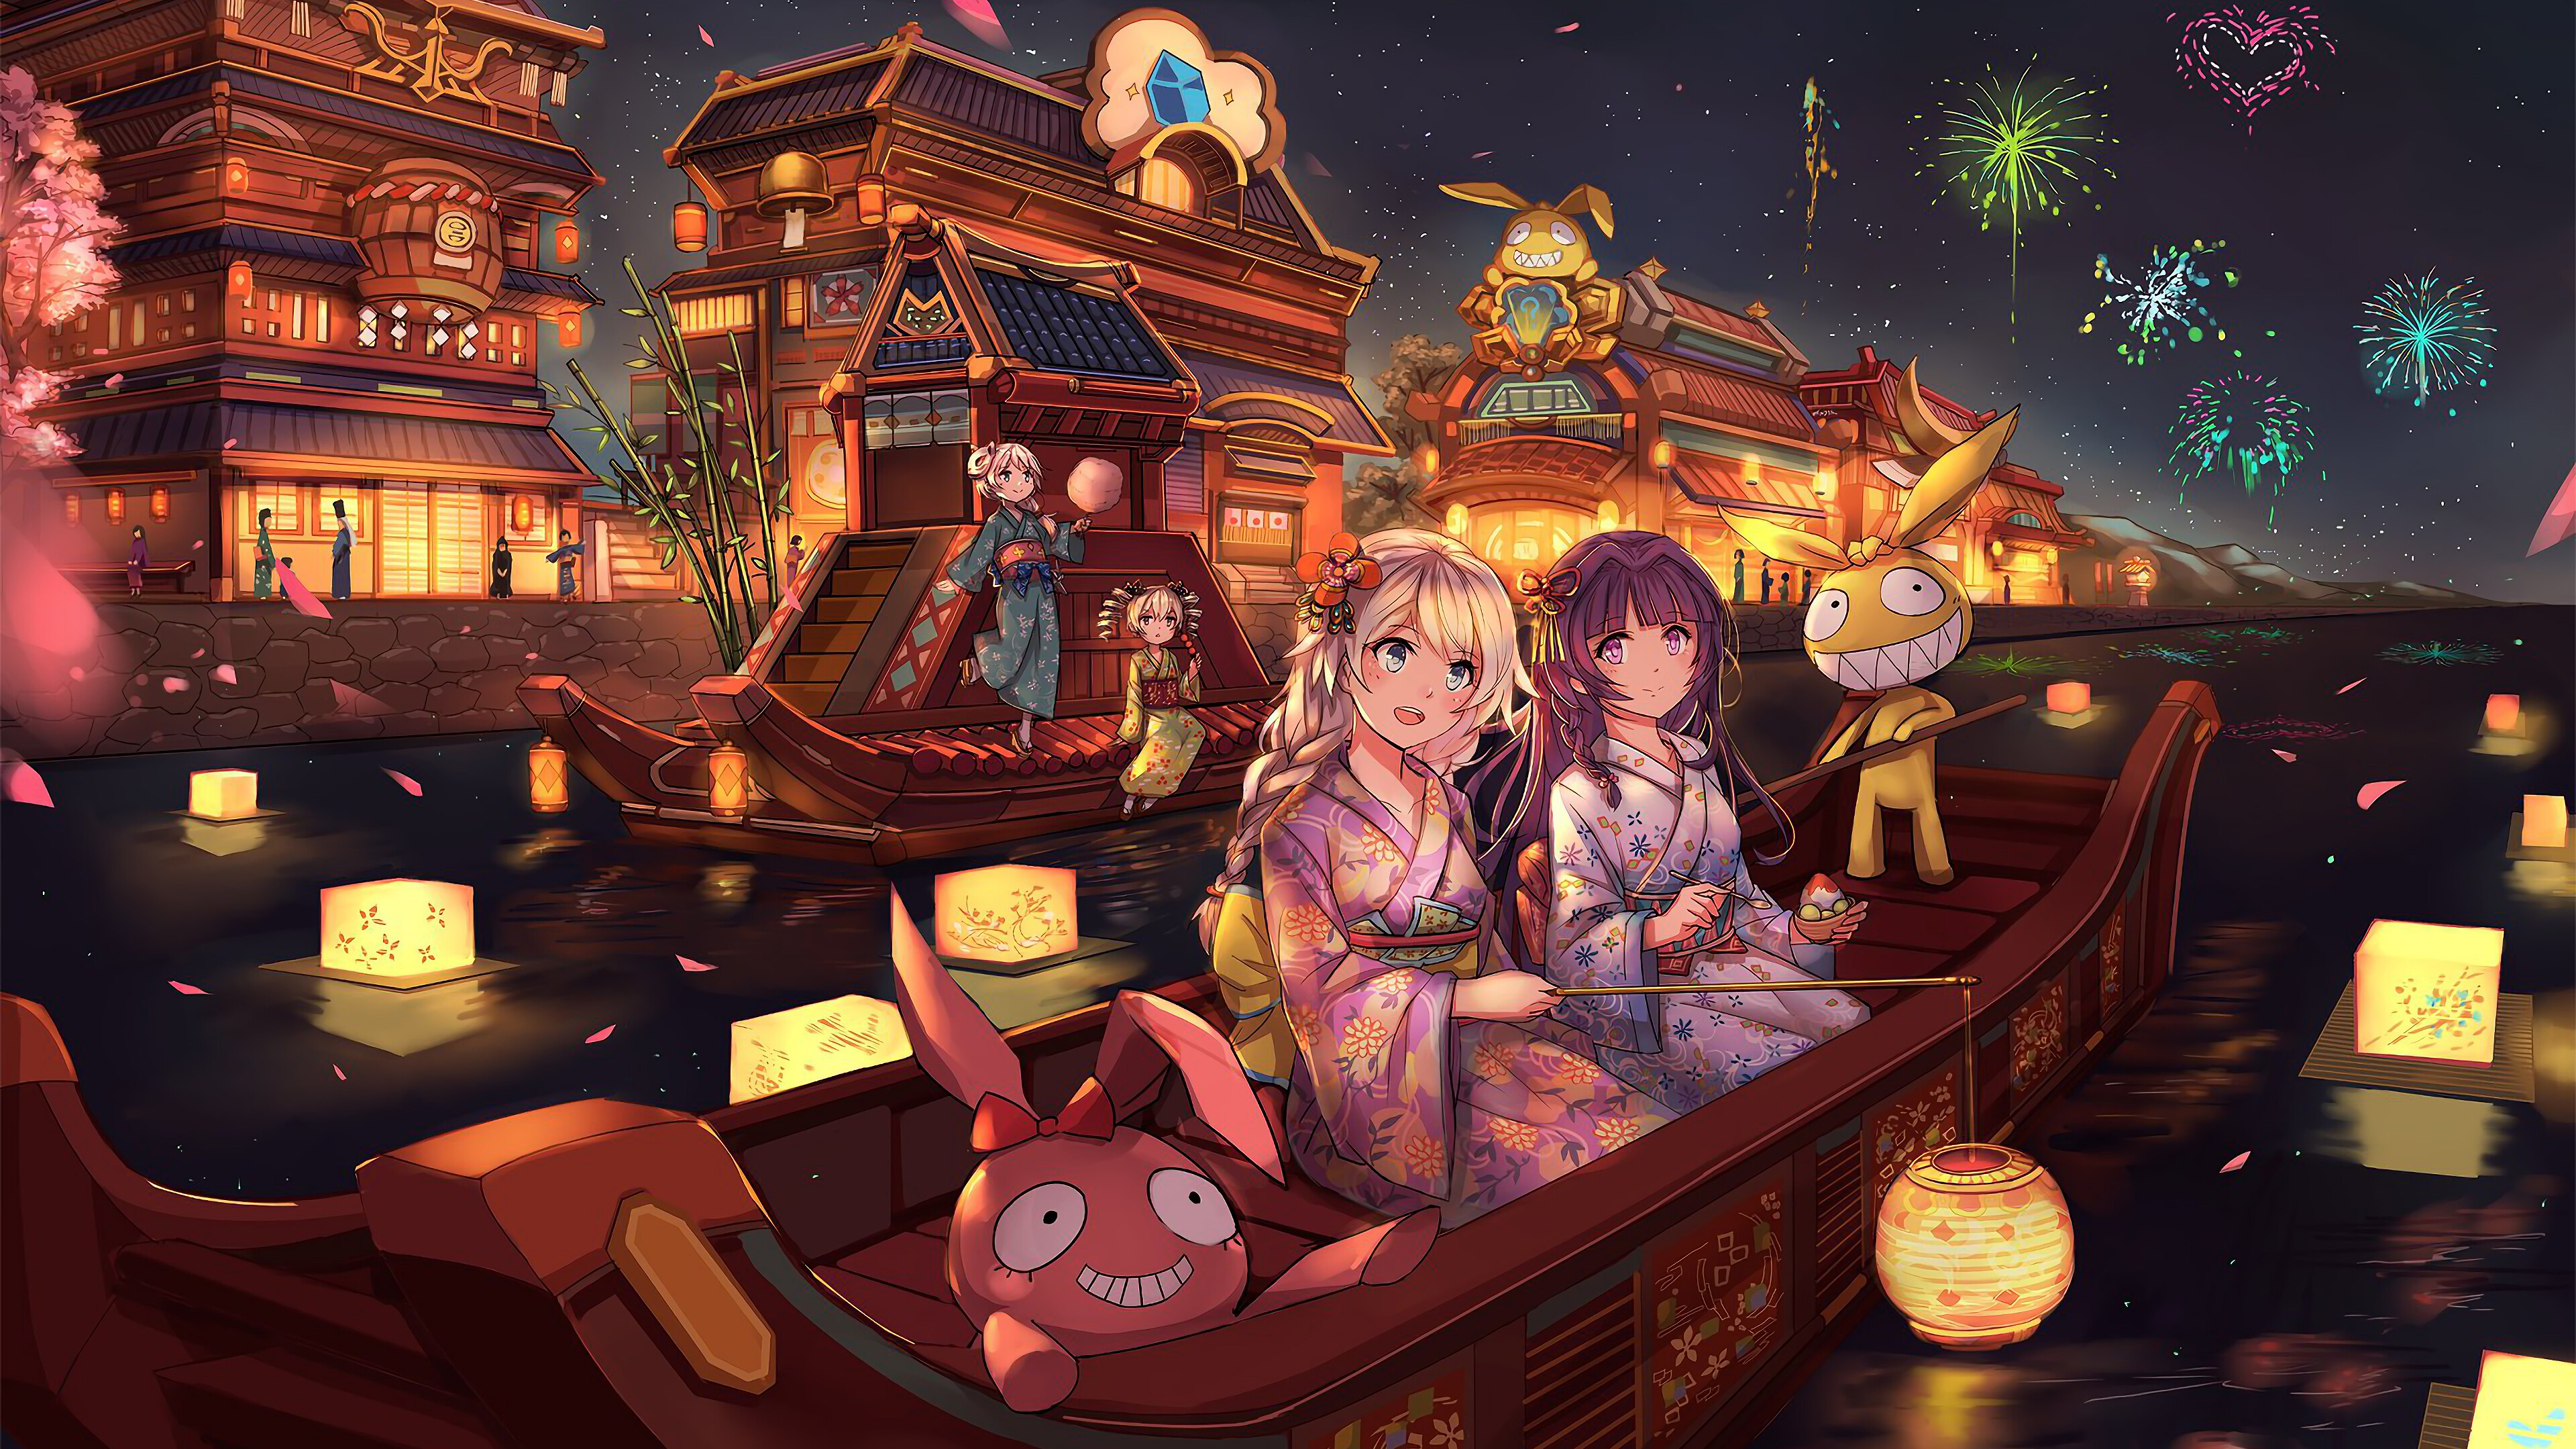 Wallpaper ID: 122761 / anime girls, anime, trees, fantasy girl, lantern  free download